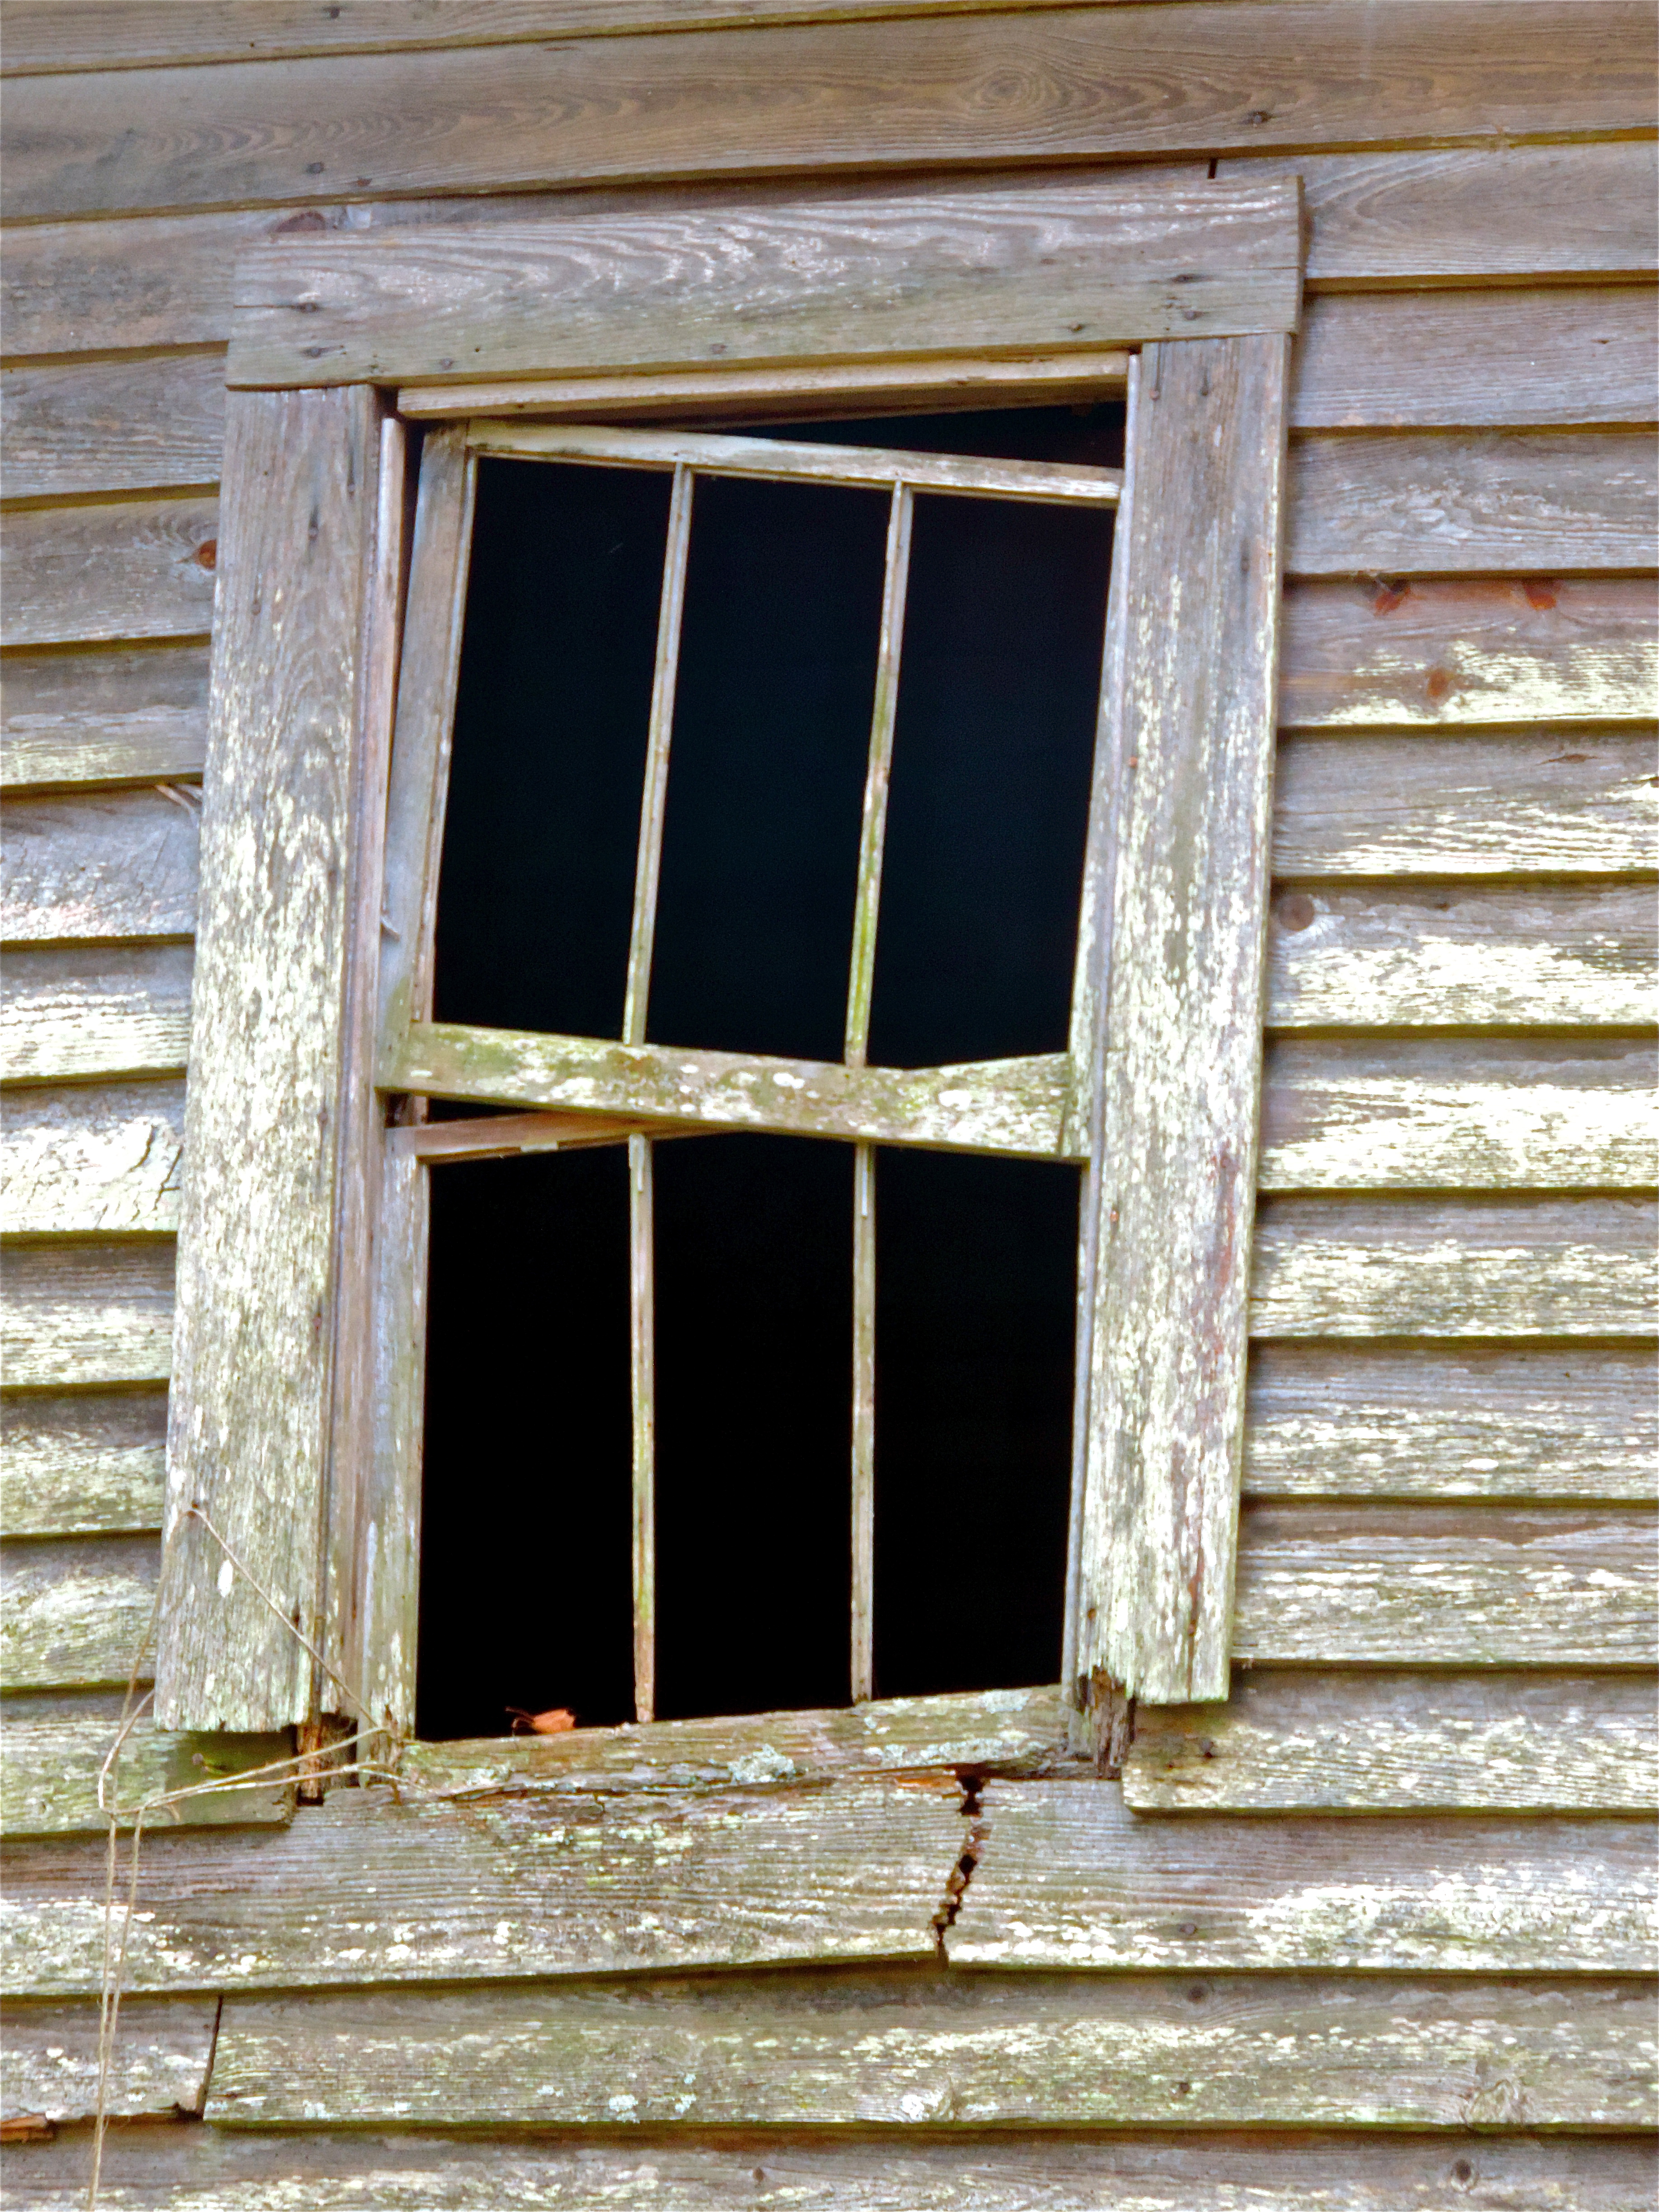 Broken Window | What Light Through Yonder Window Breaks?